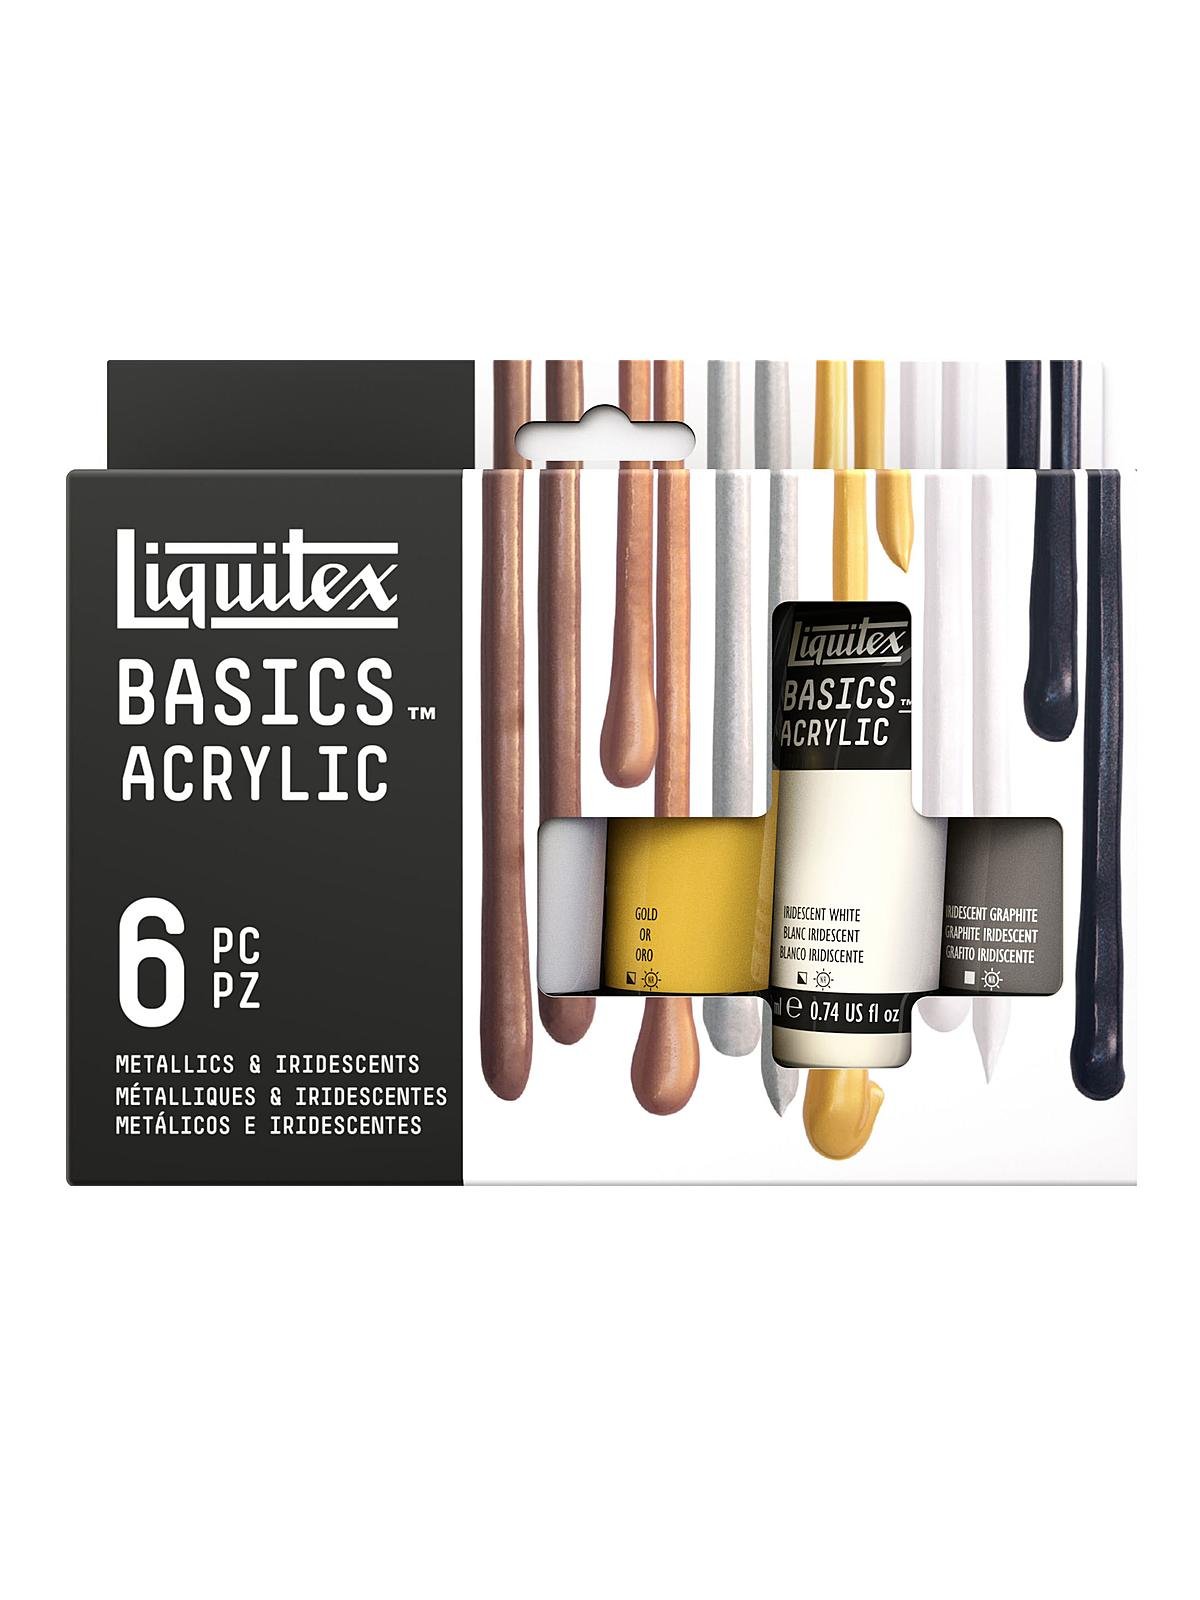 Liquitex Basics Acrylic Paint Set of 36 22ml